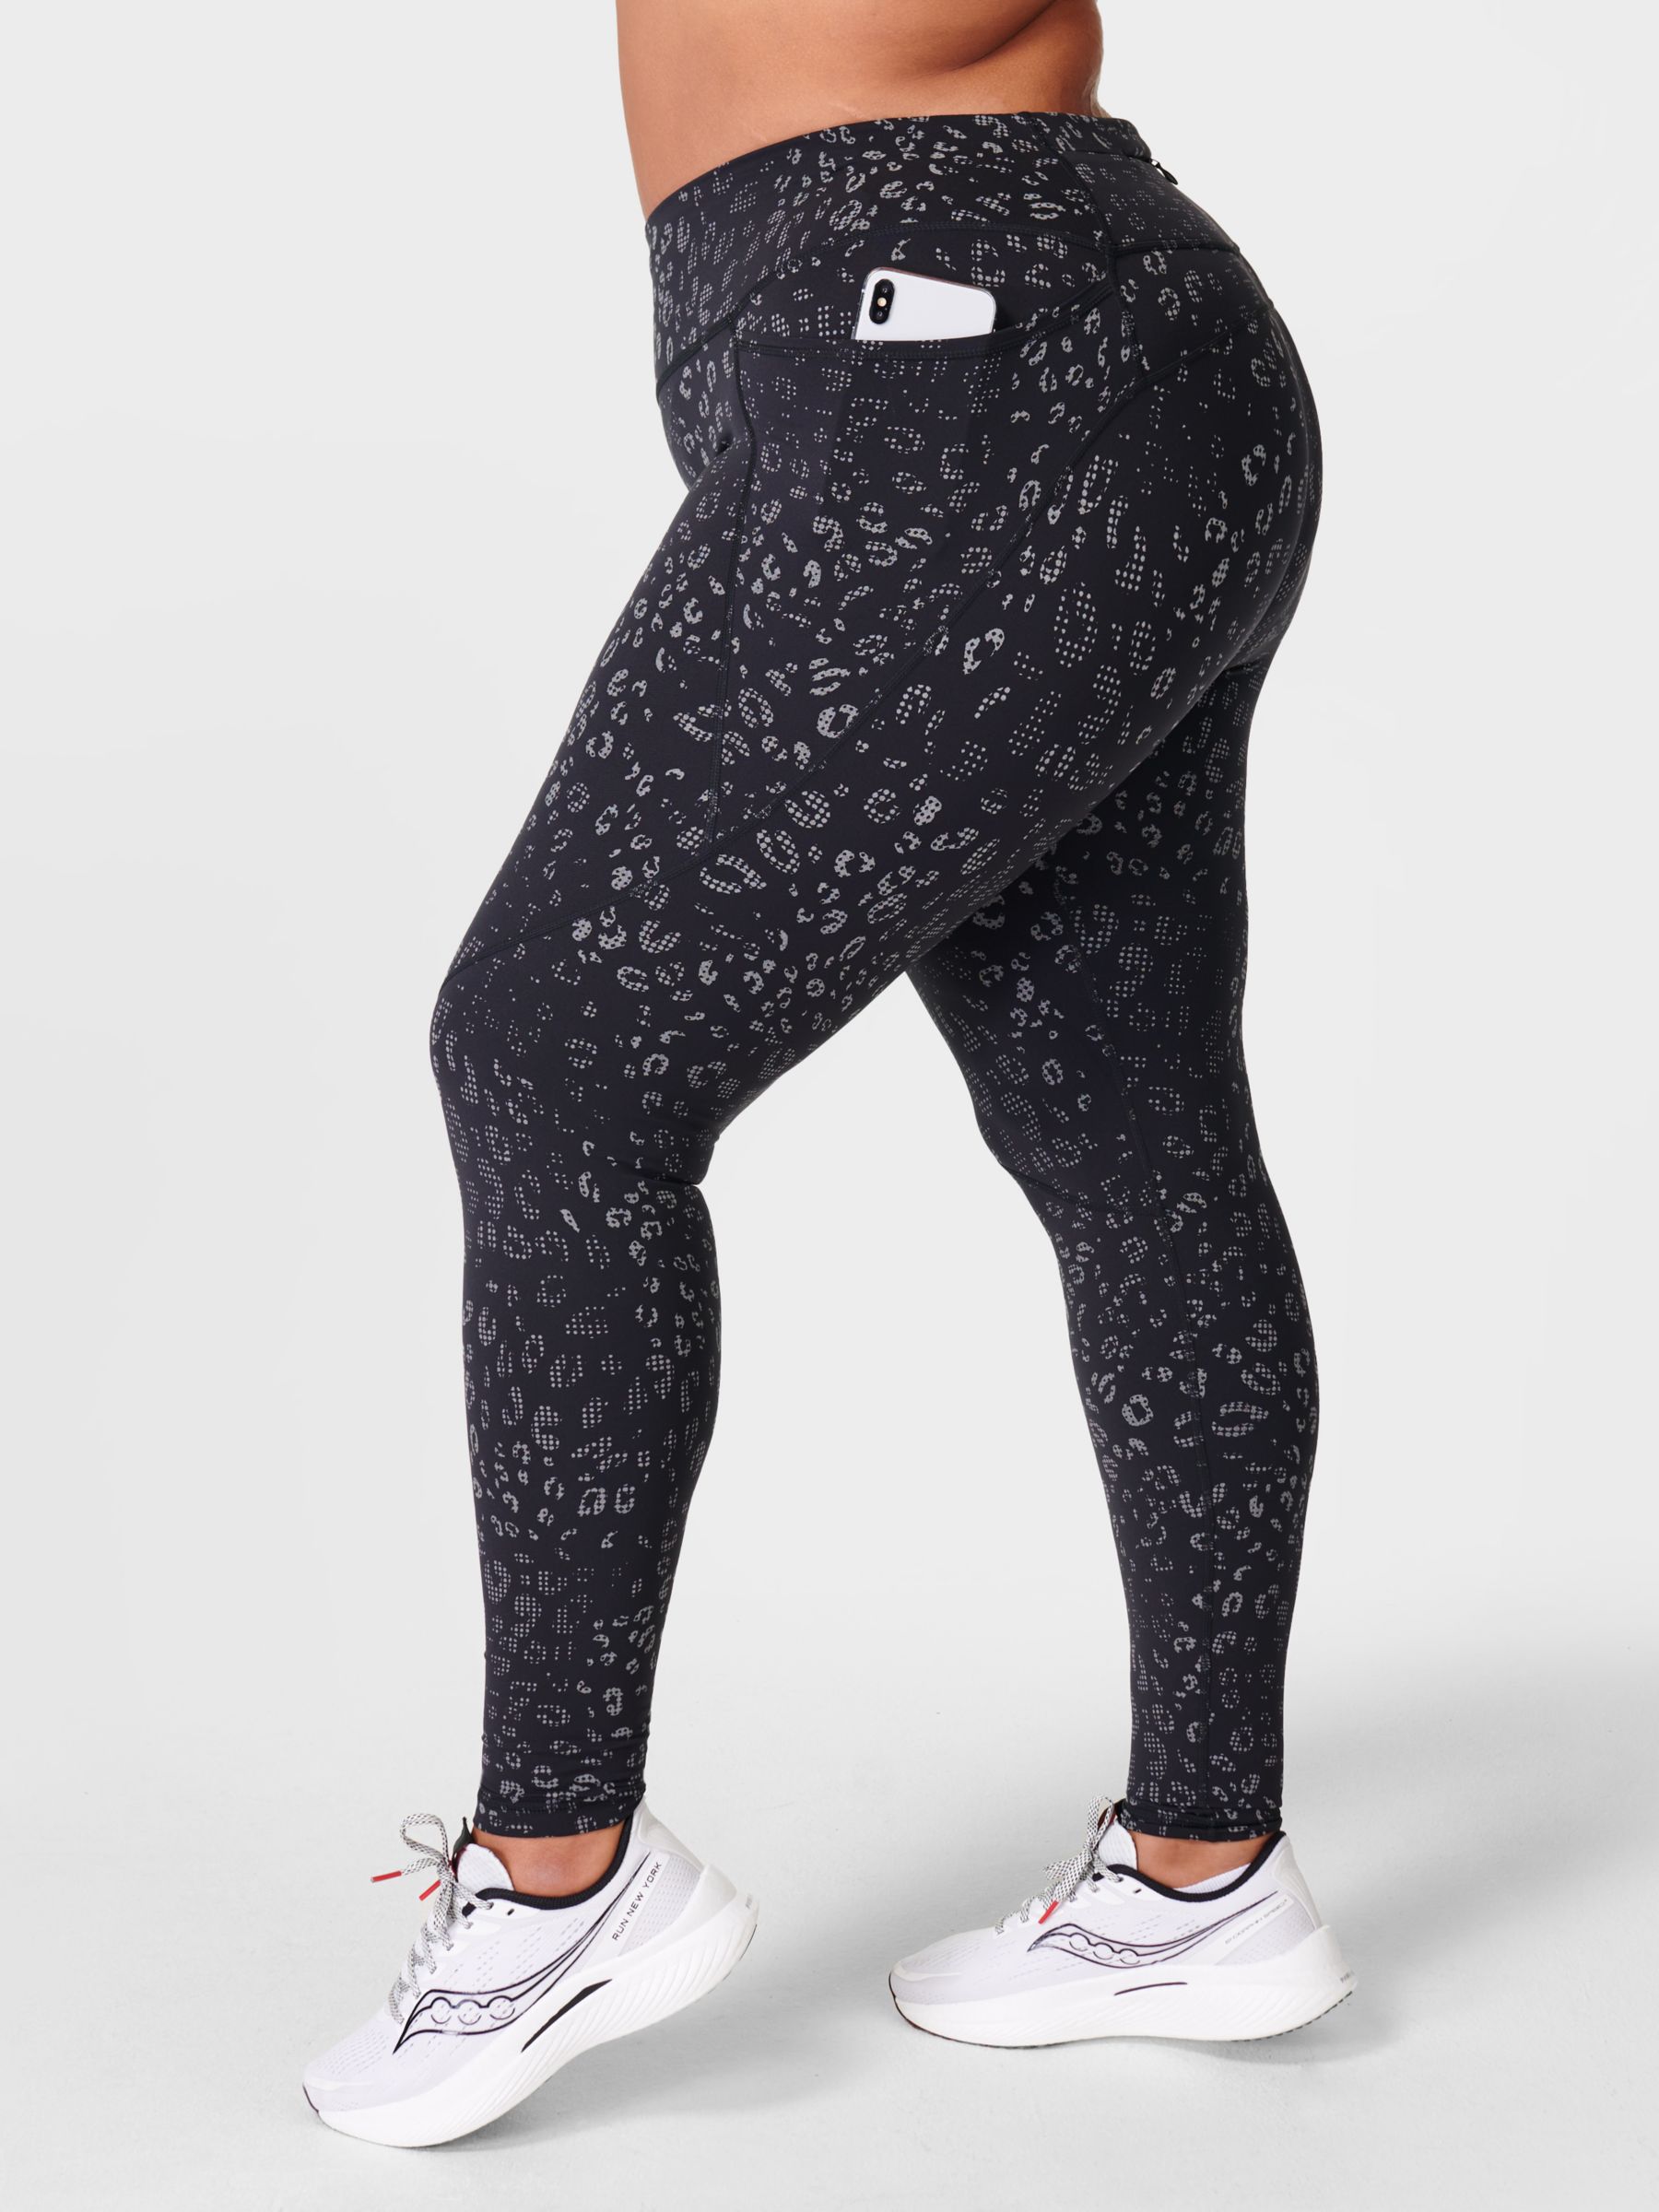 Women Reflective Stripes Printing Sports Yoga Pants Slim High